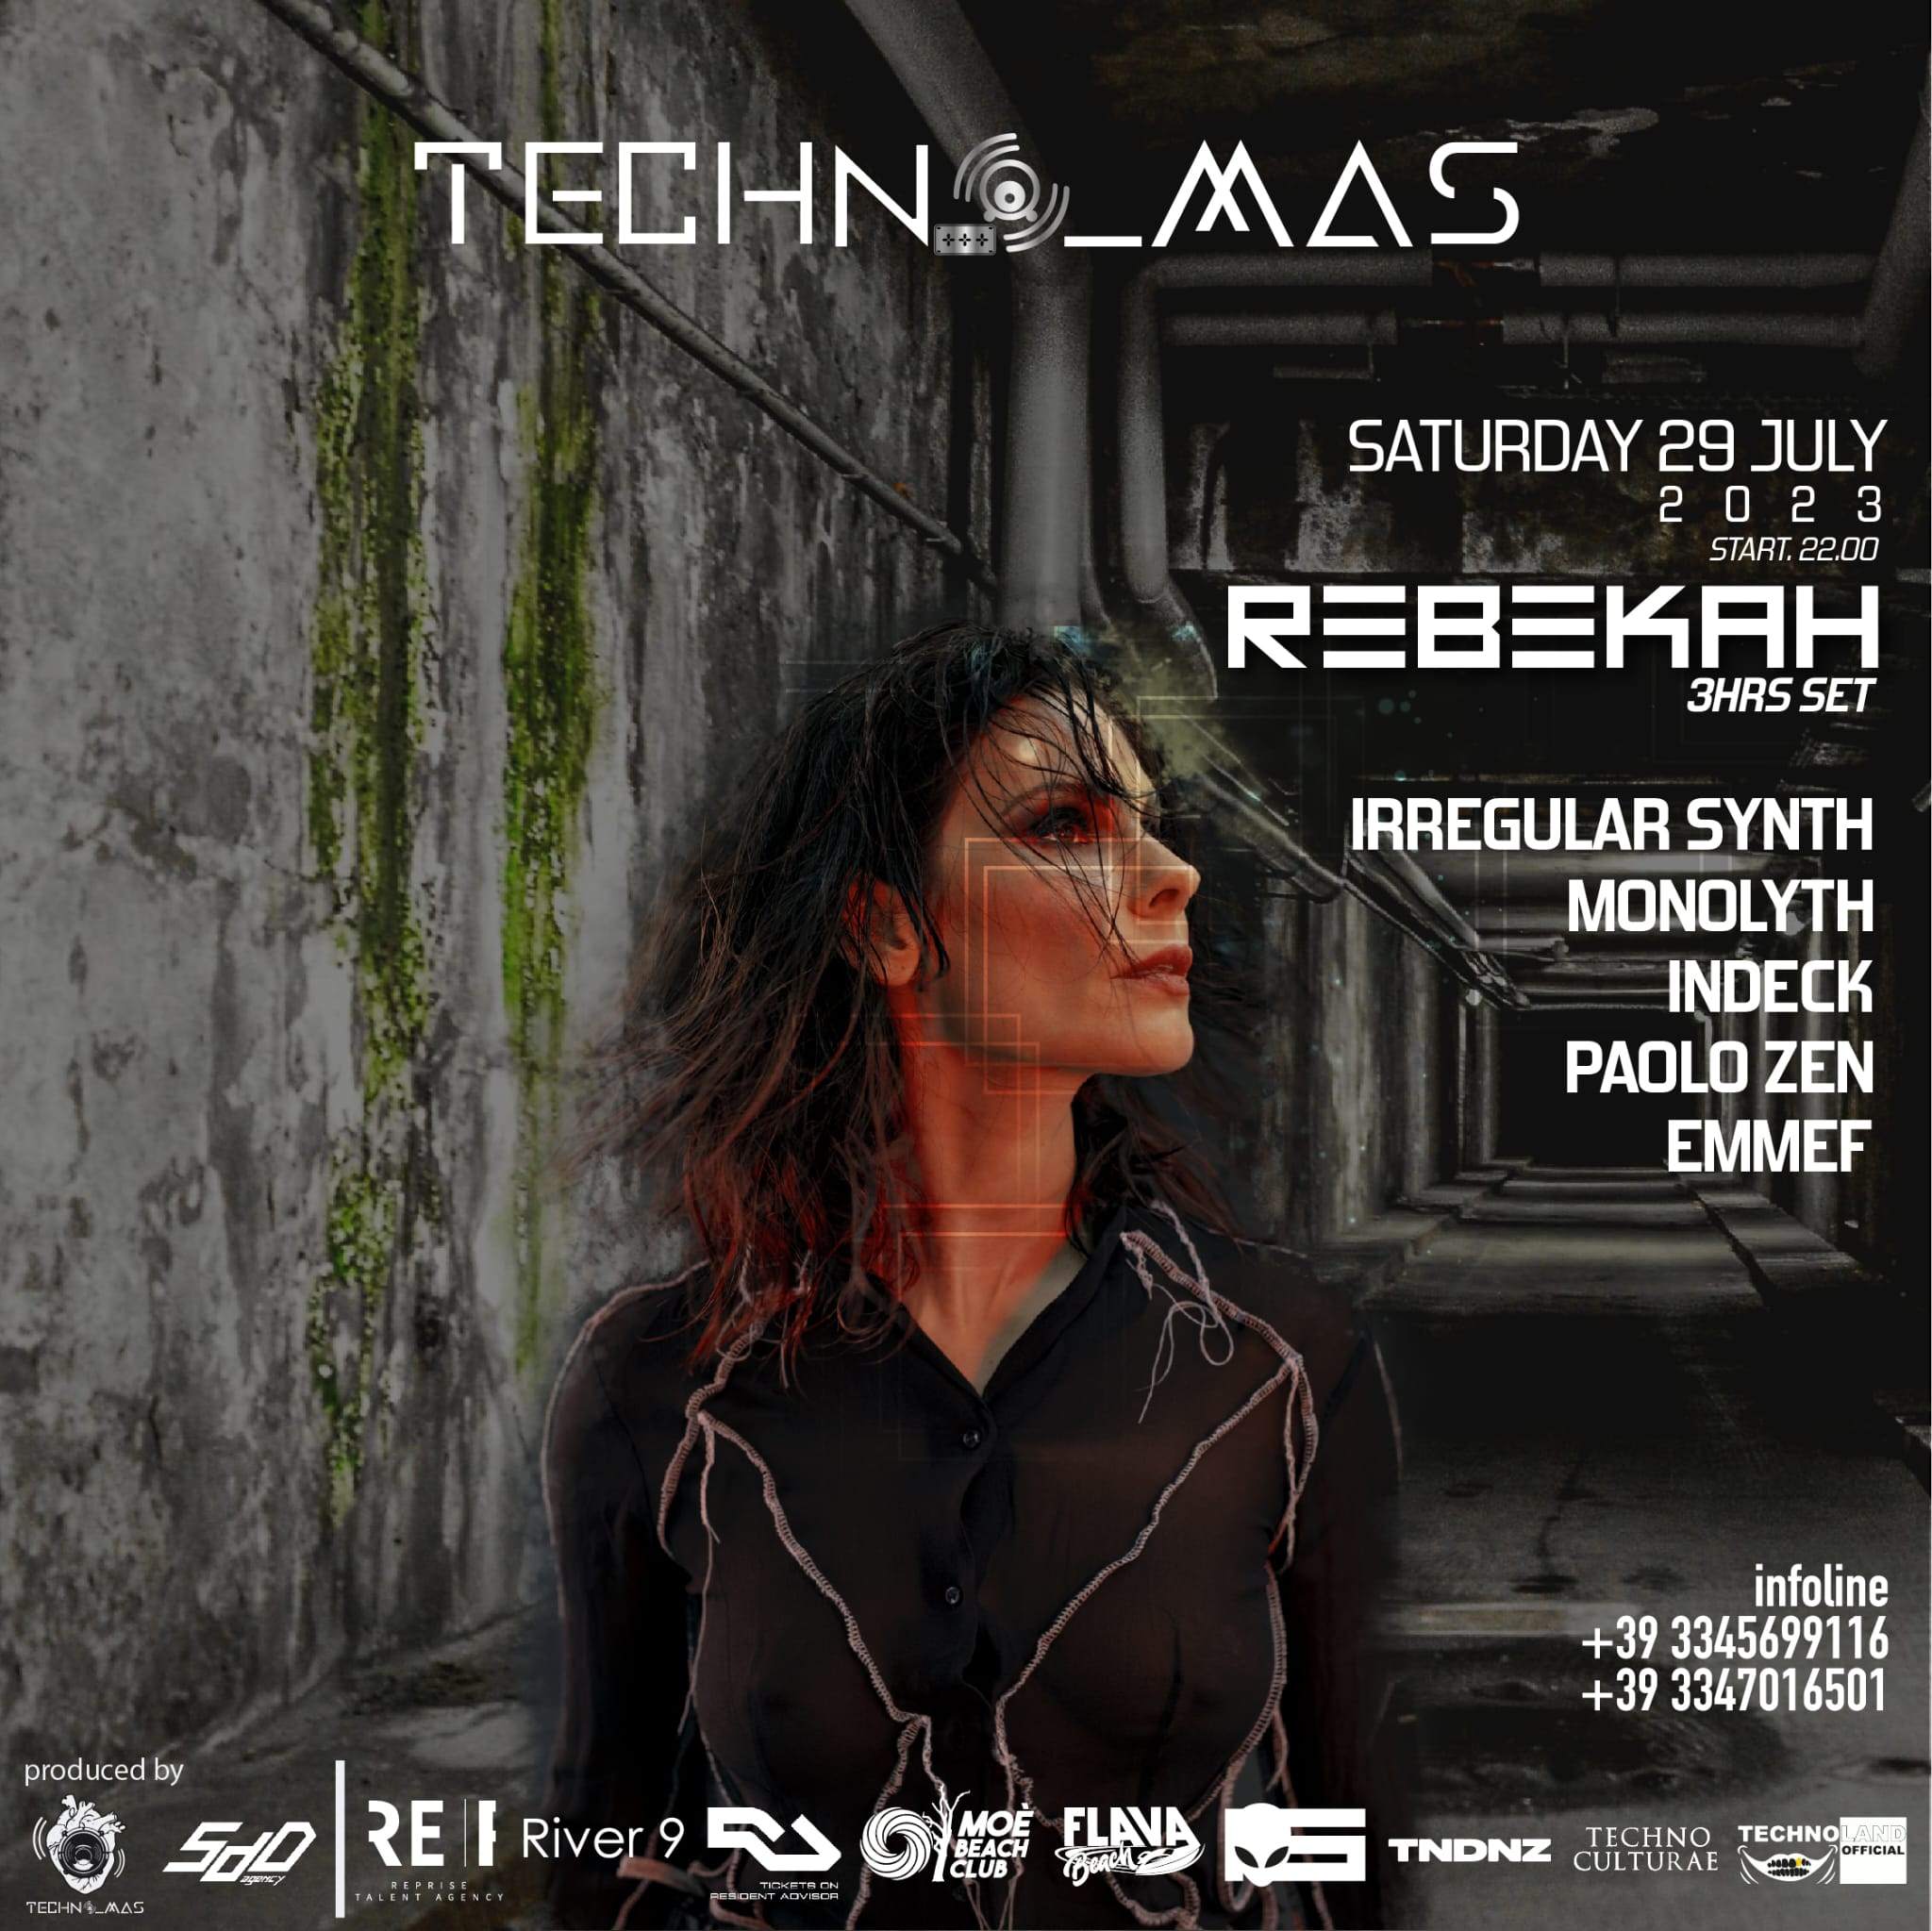 TECHNO_MAS presents: Rebekah 3hrs set - フライヤー表